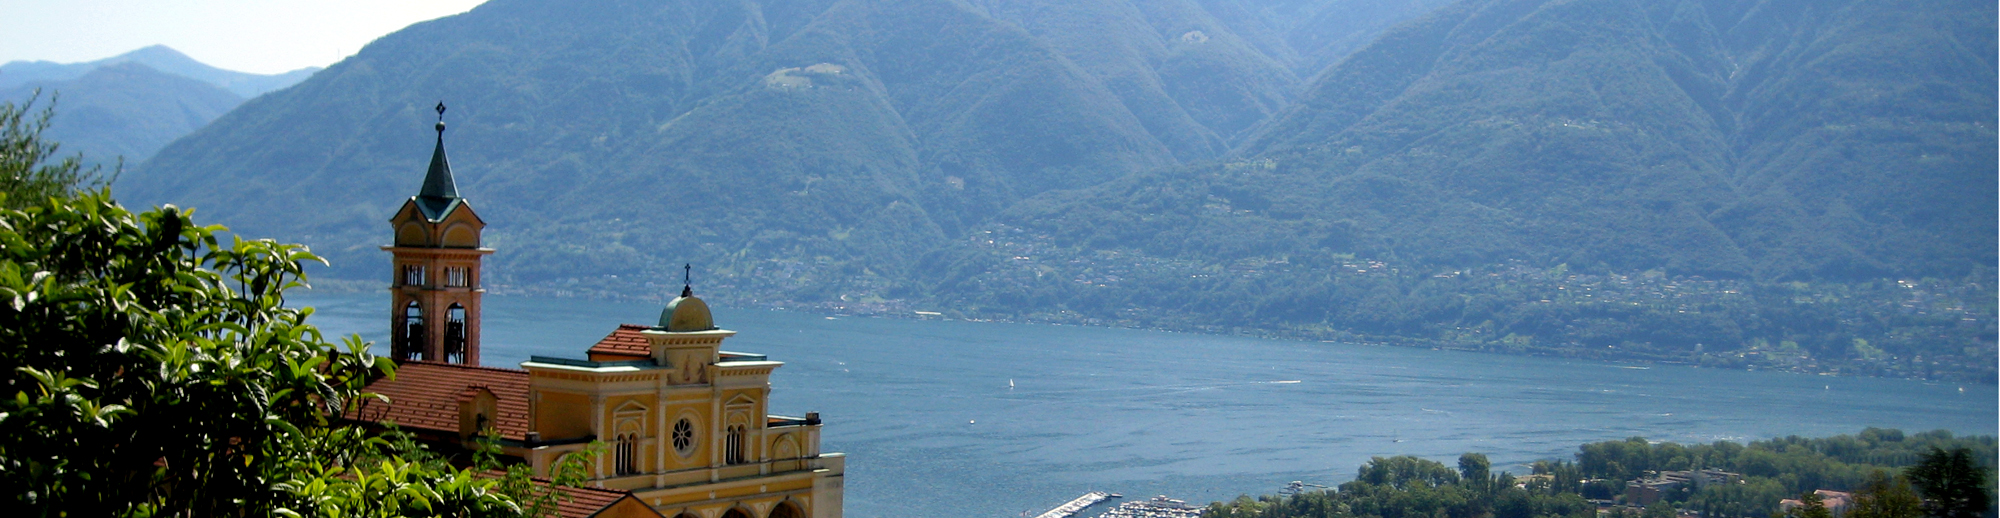 Svizzera - Lugano